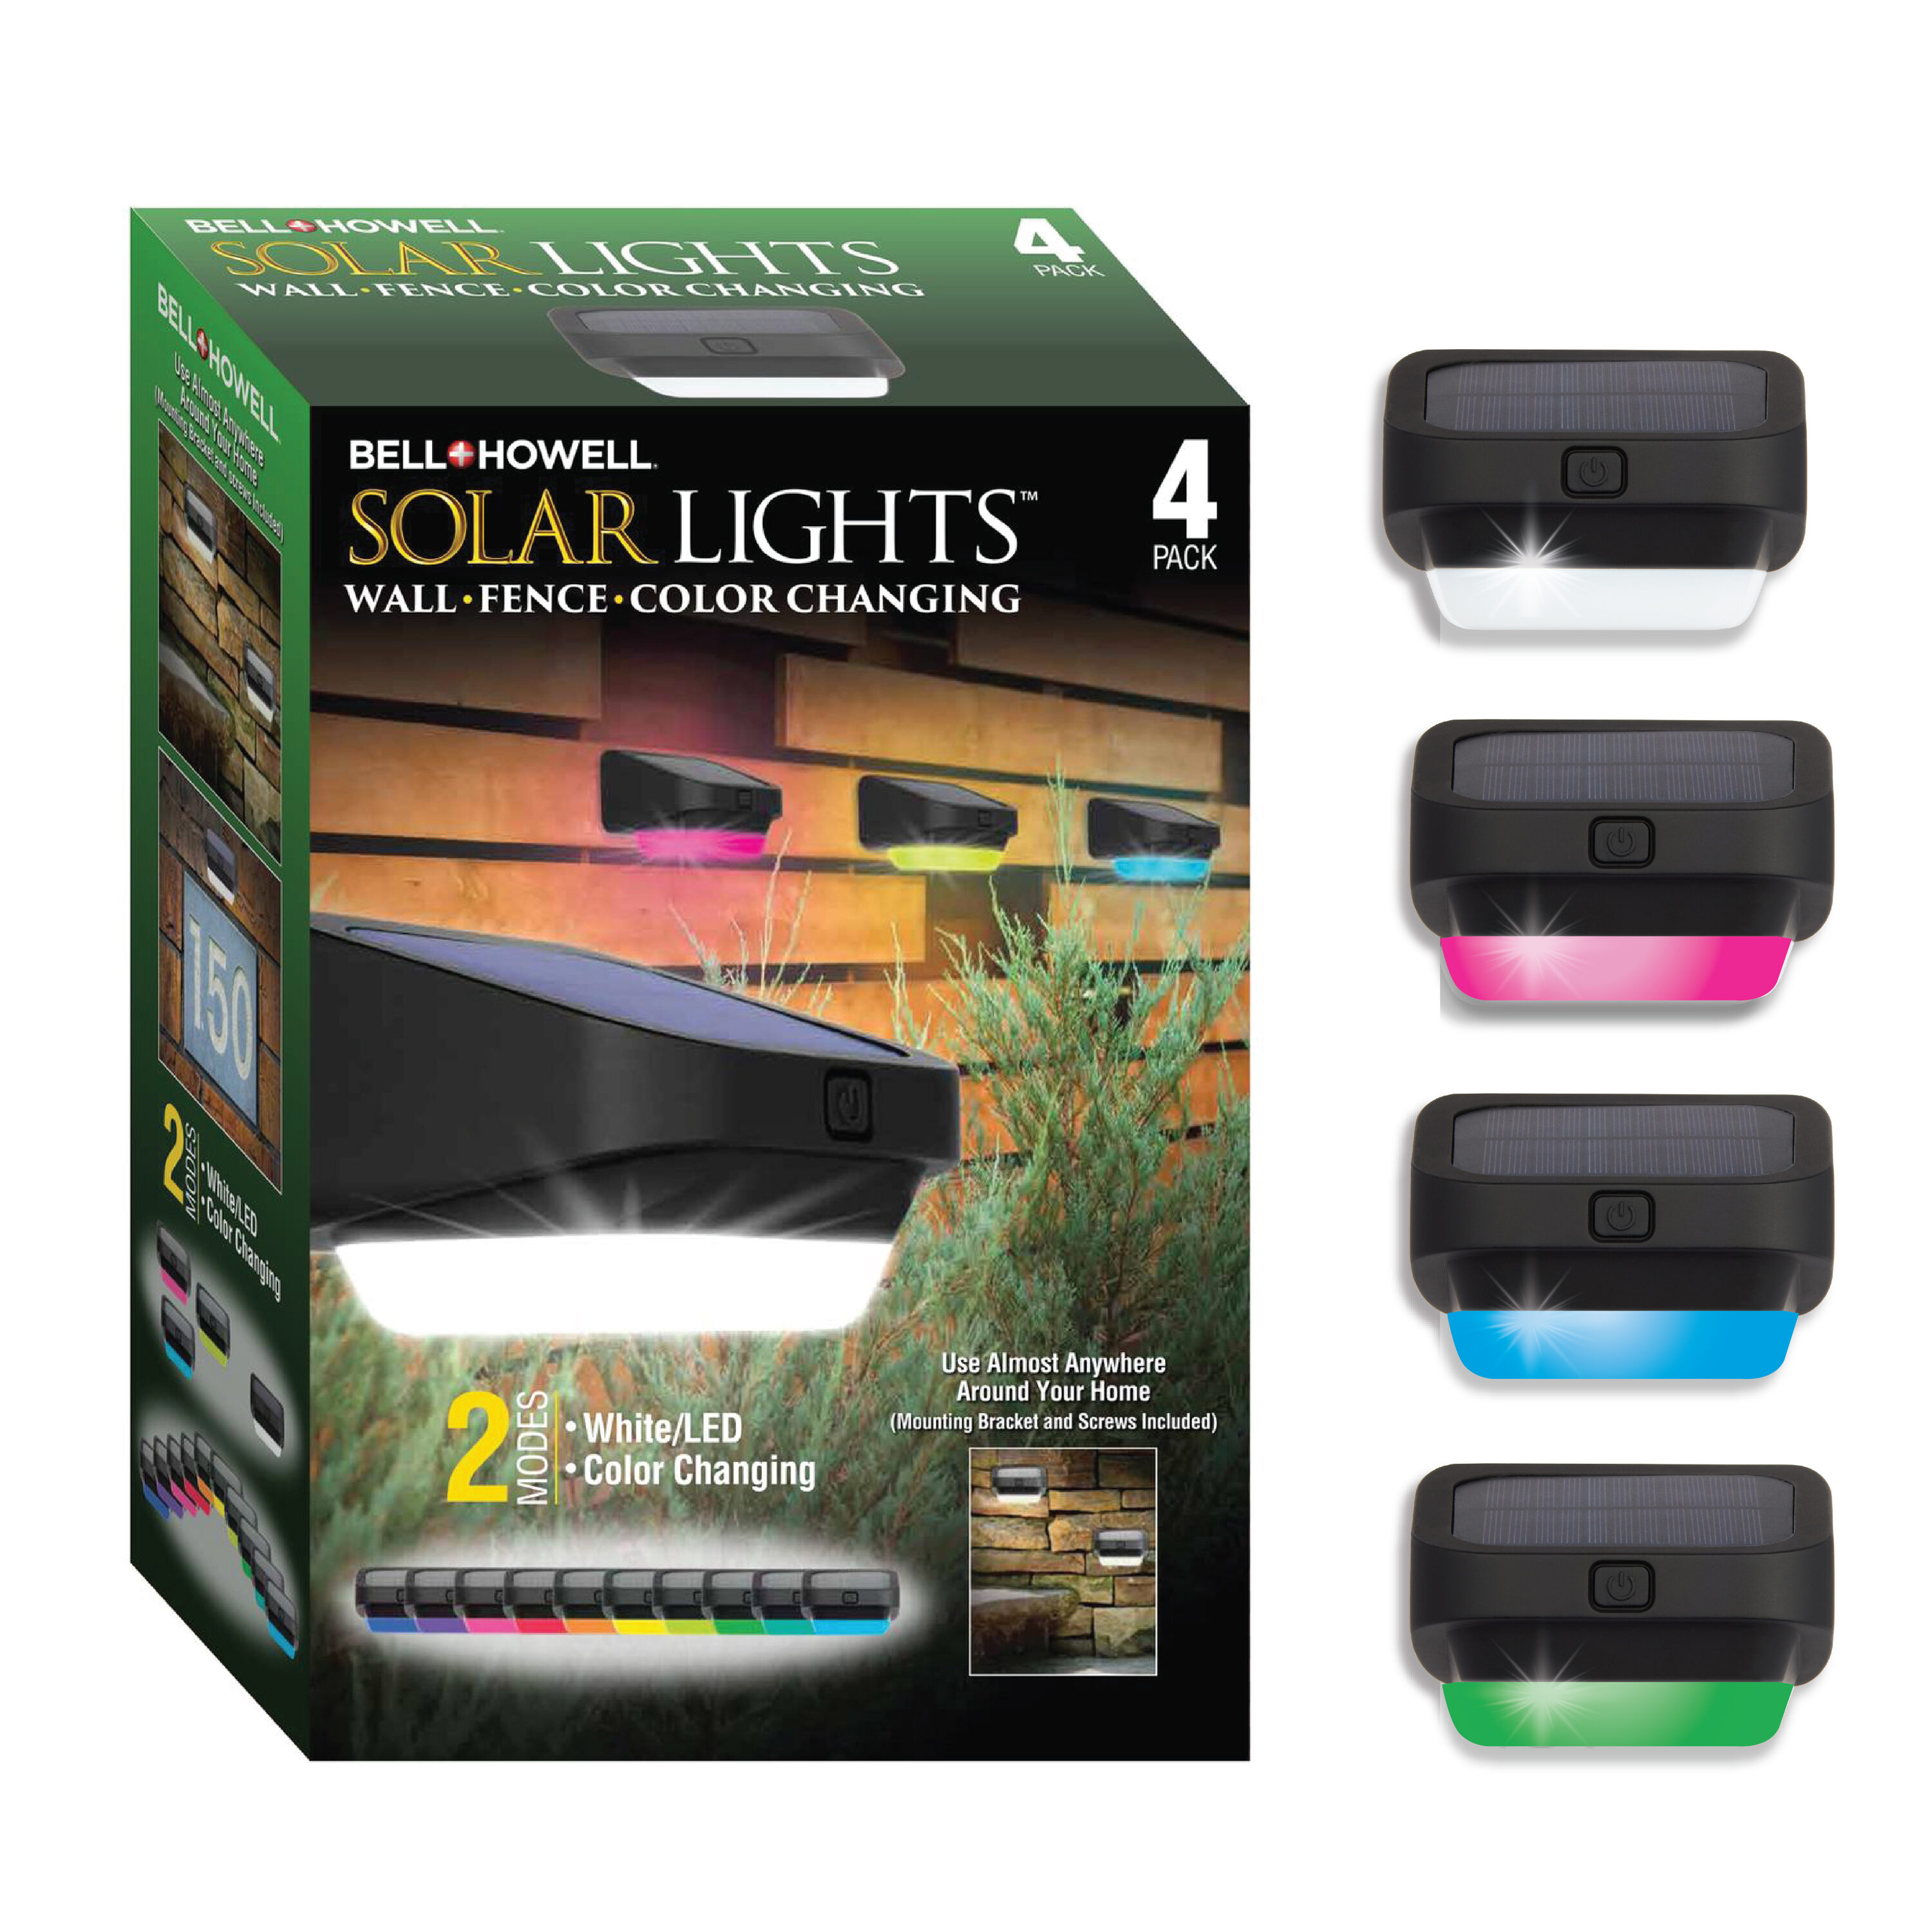 Bell & Howell 21 Lumens Solar Powered Landscape Path Lights 2 Modes Warm Bright Light (4-Pack) 7723